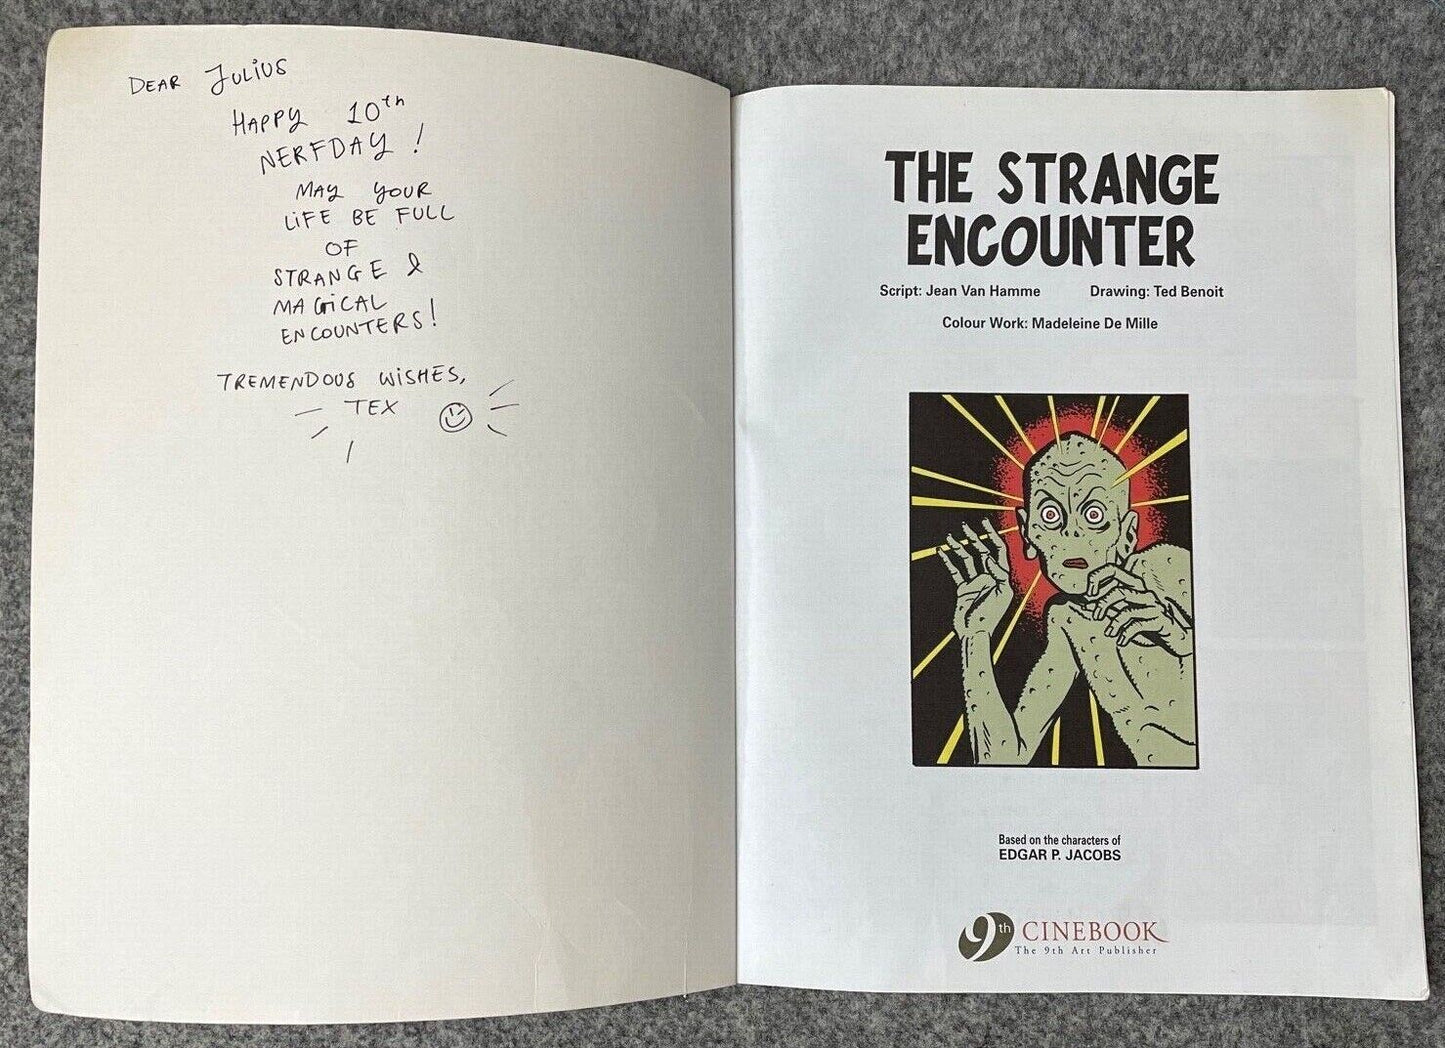 The Strange Encounter - Blake & Mortimer Comic Volume 5 - Cinebook UK Paperback Edition